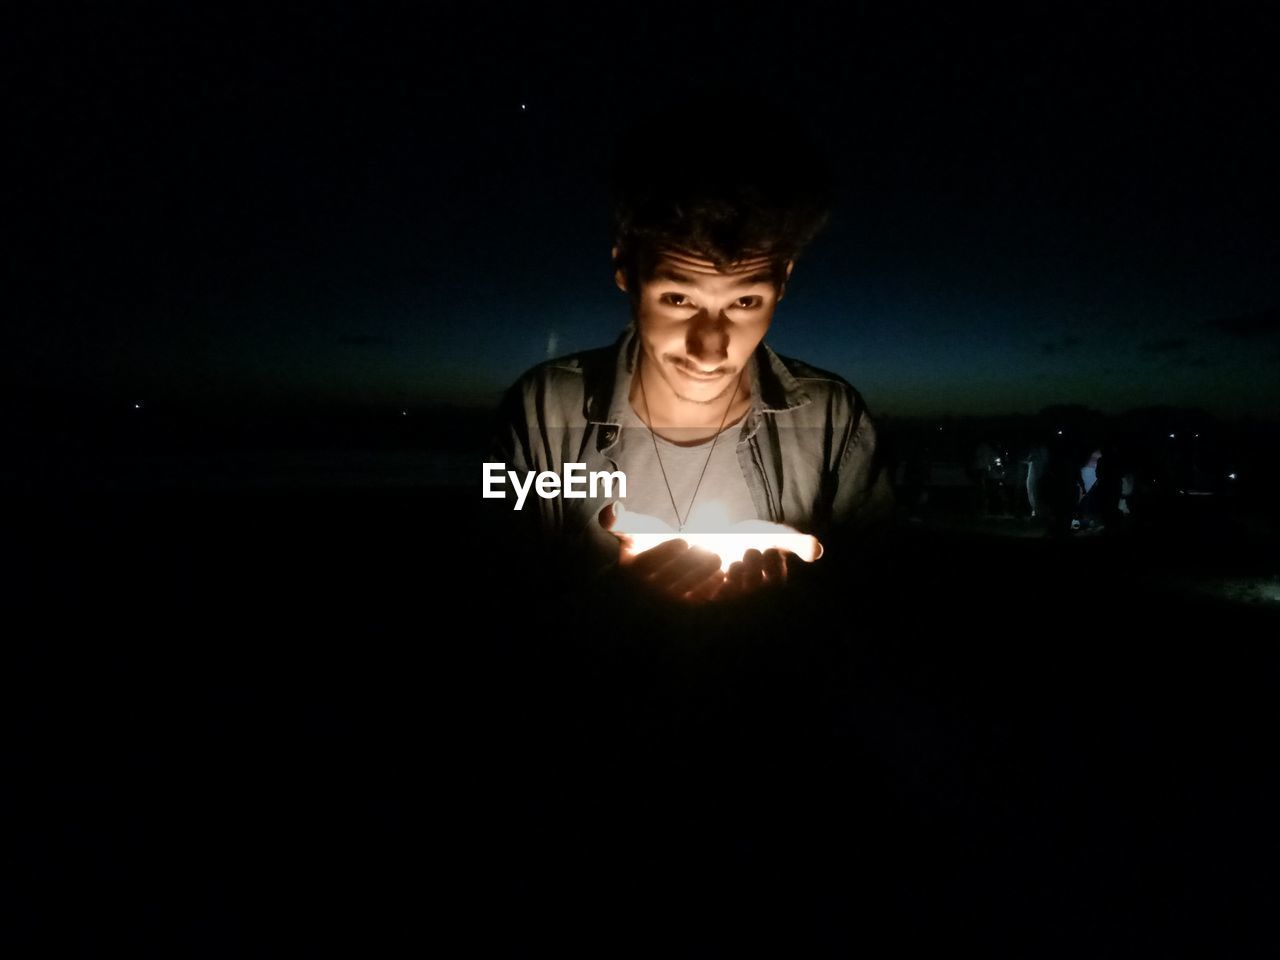 Portrait of man holding illuminated light against sky at night